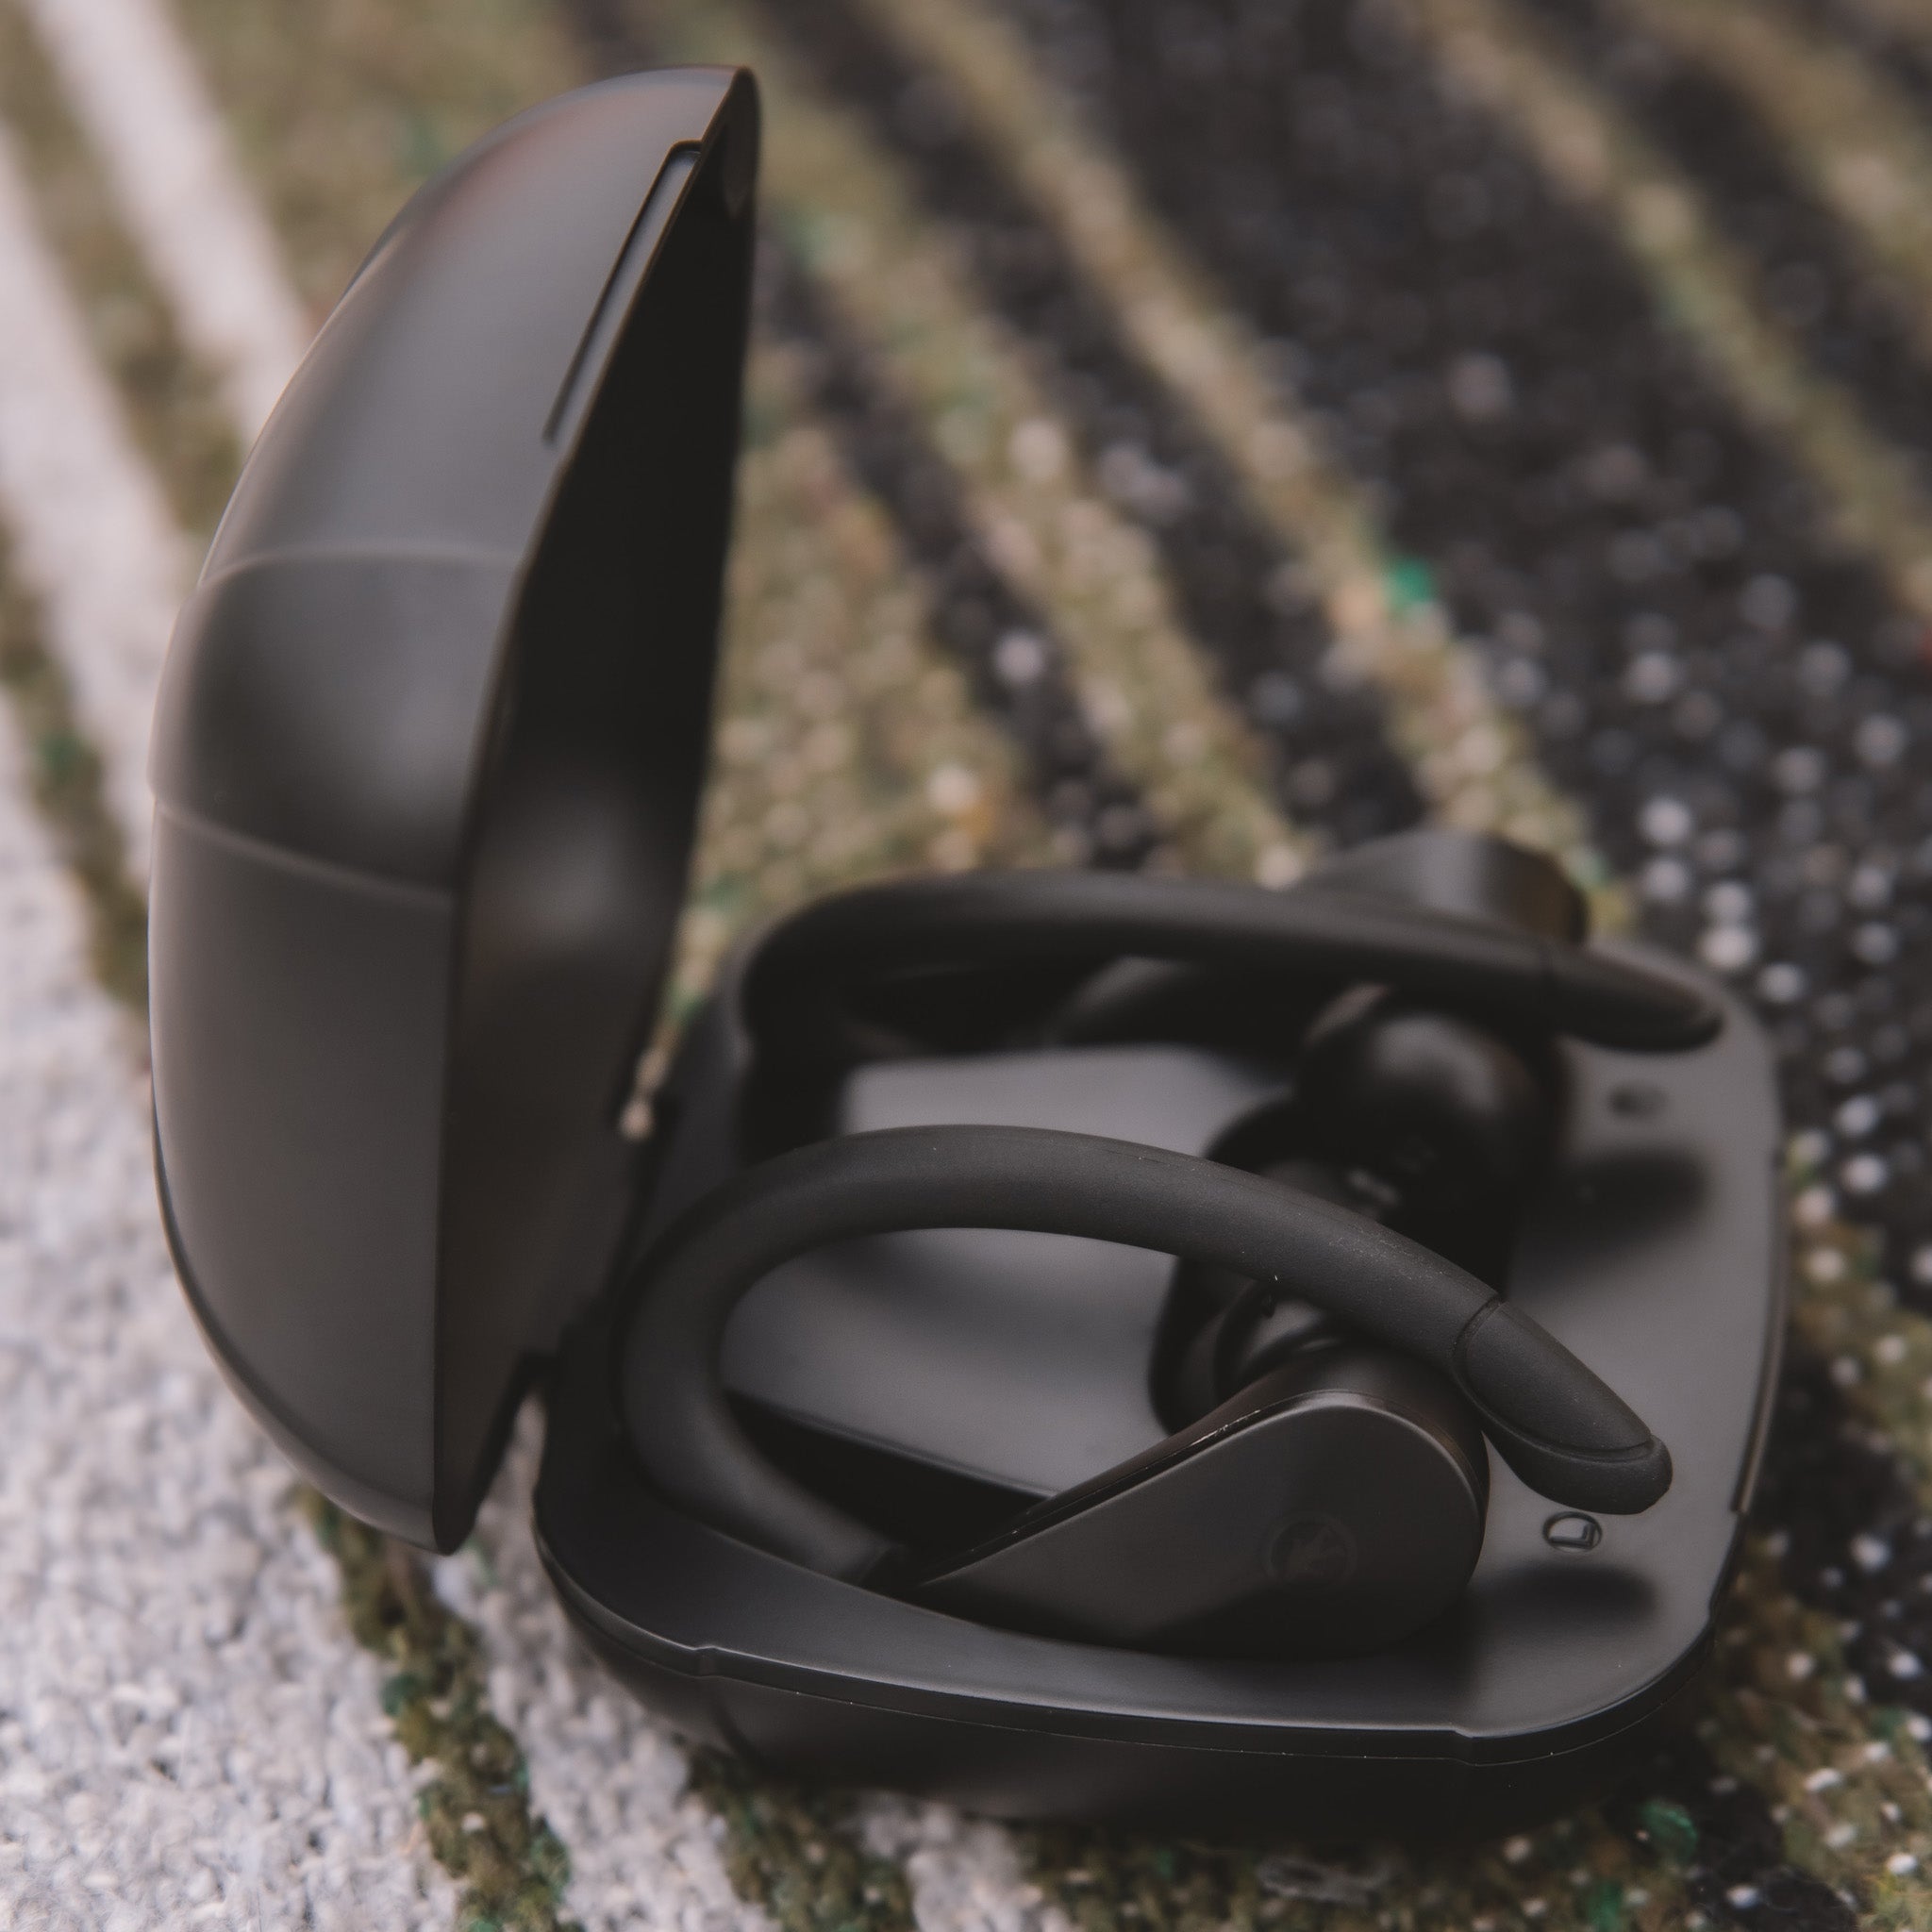 Mantas 2.0 Earbuds With Recharging Case